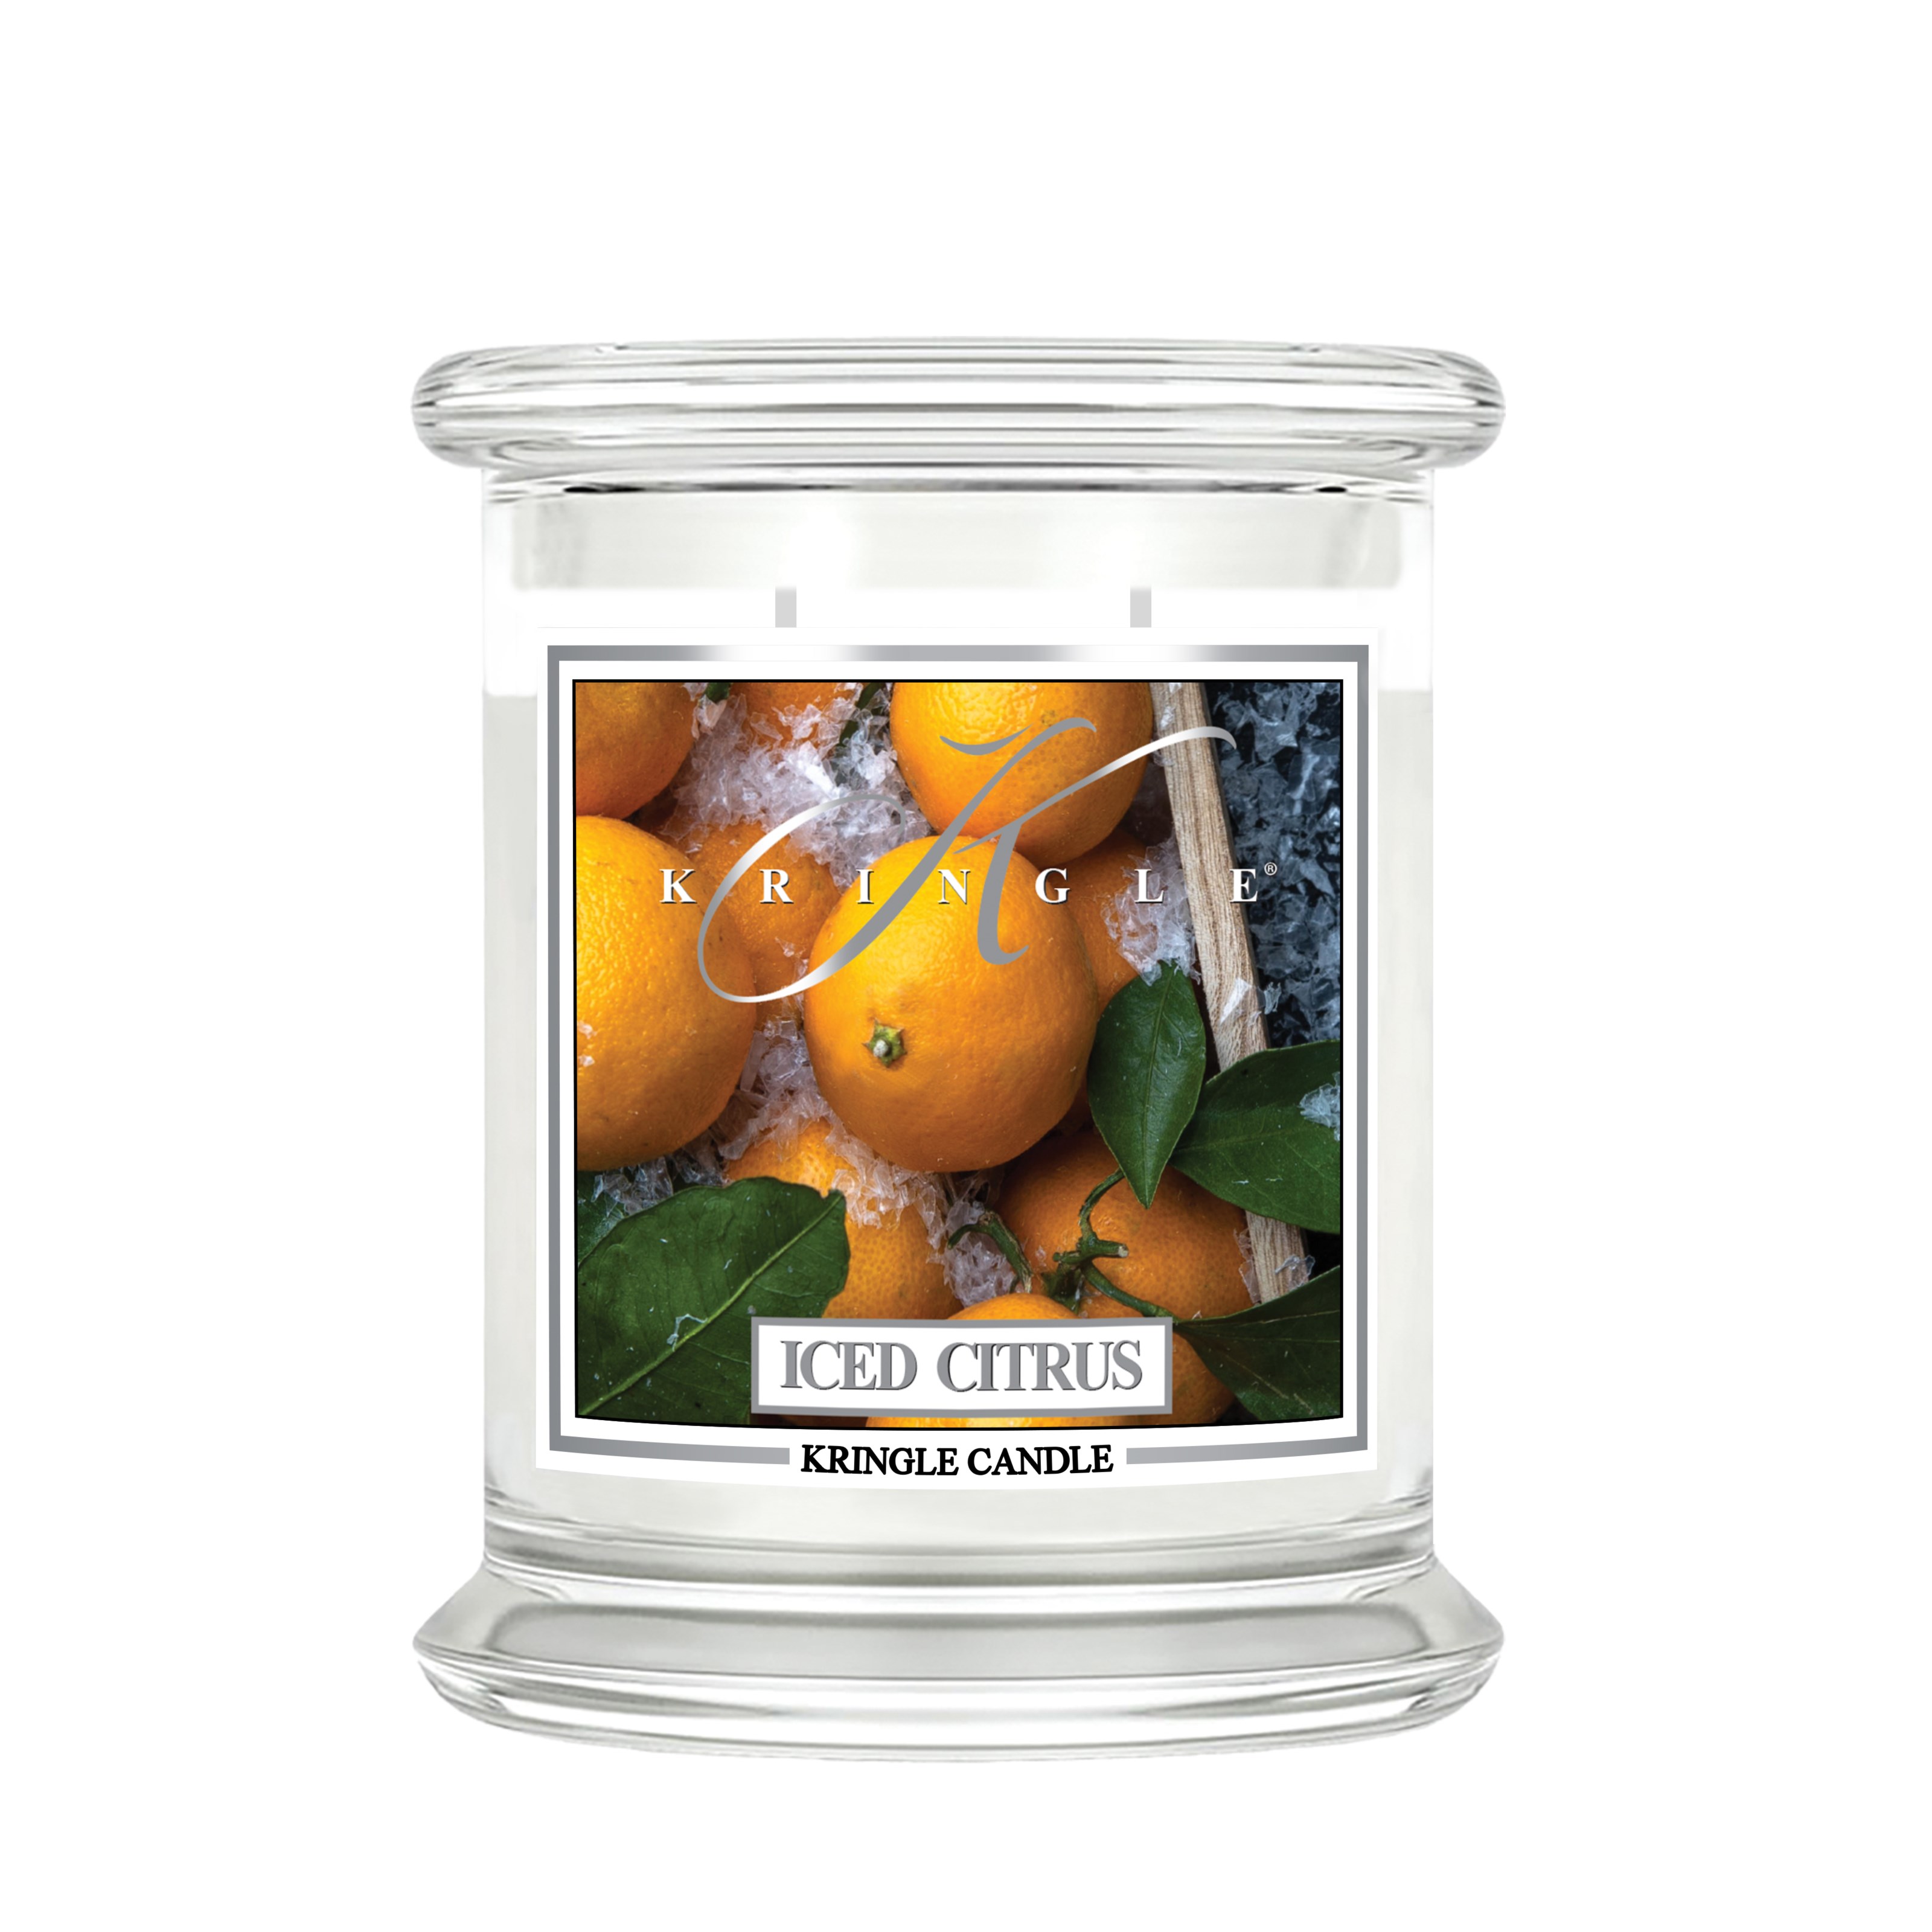 Kringle Candle Iced Citrus 2 Wick Medium Jar